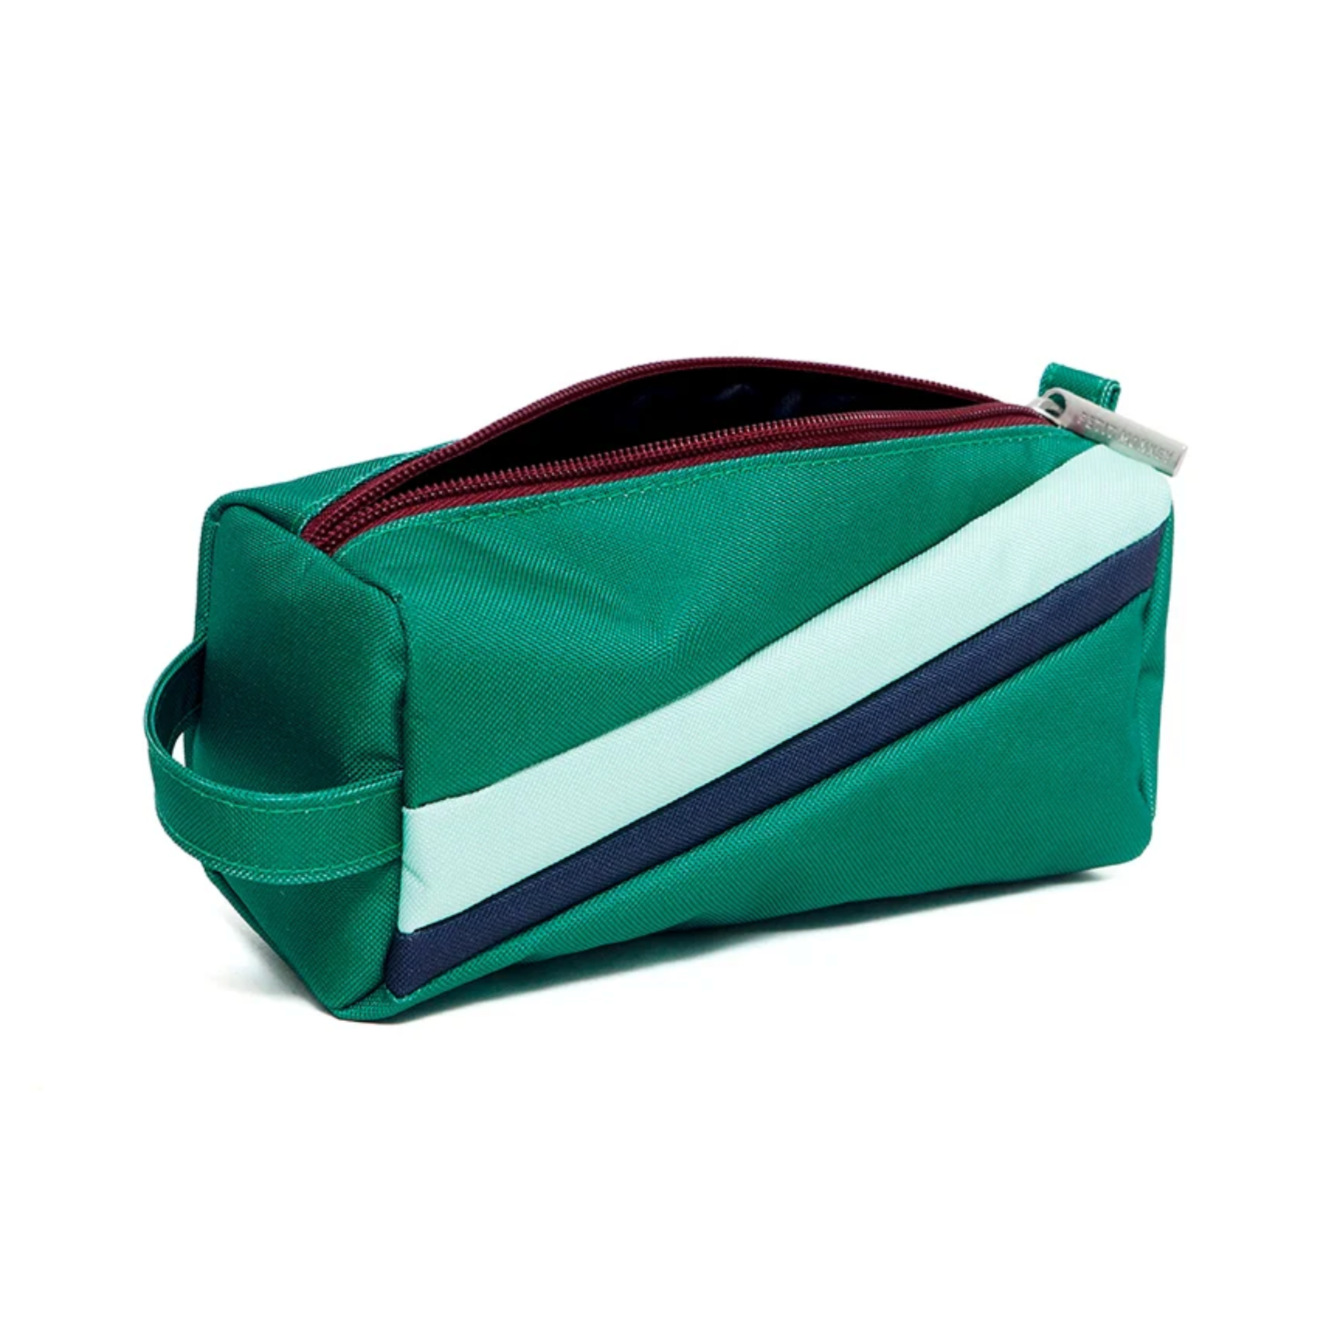 Pencil Case or Toiletry Bag -cadmium green